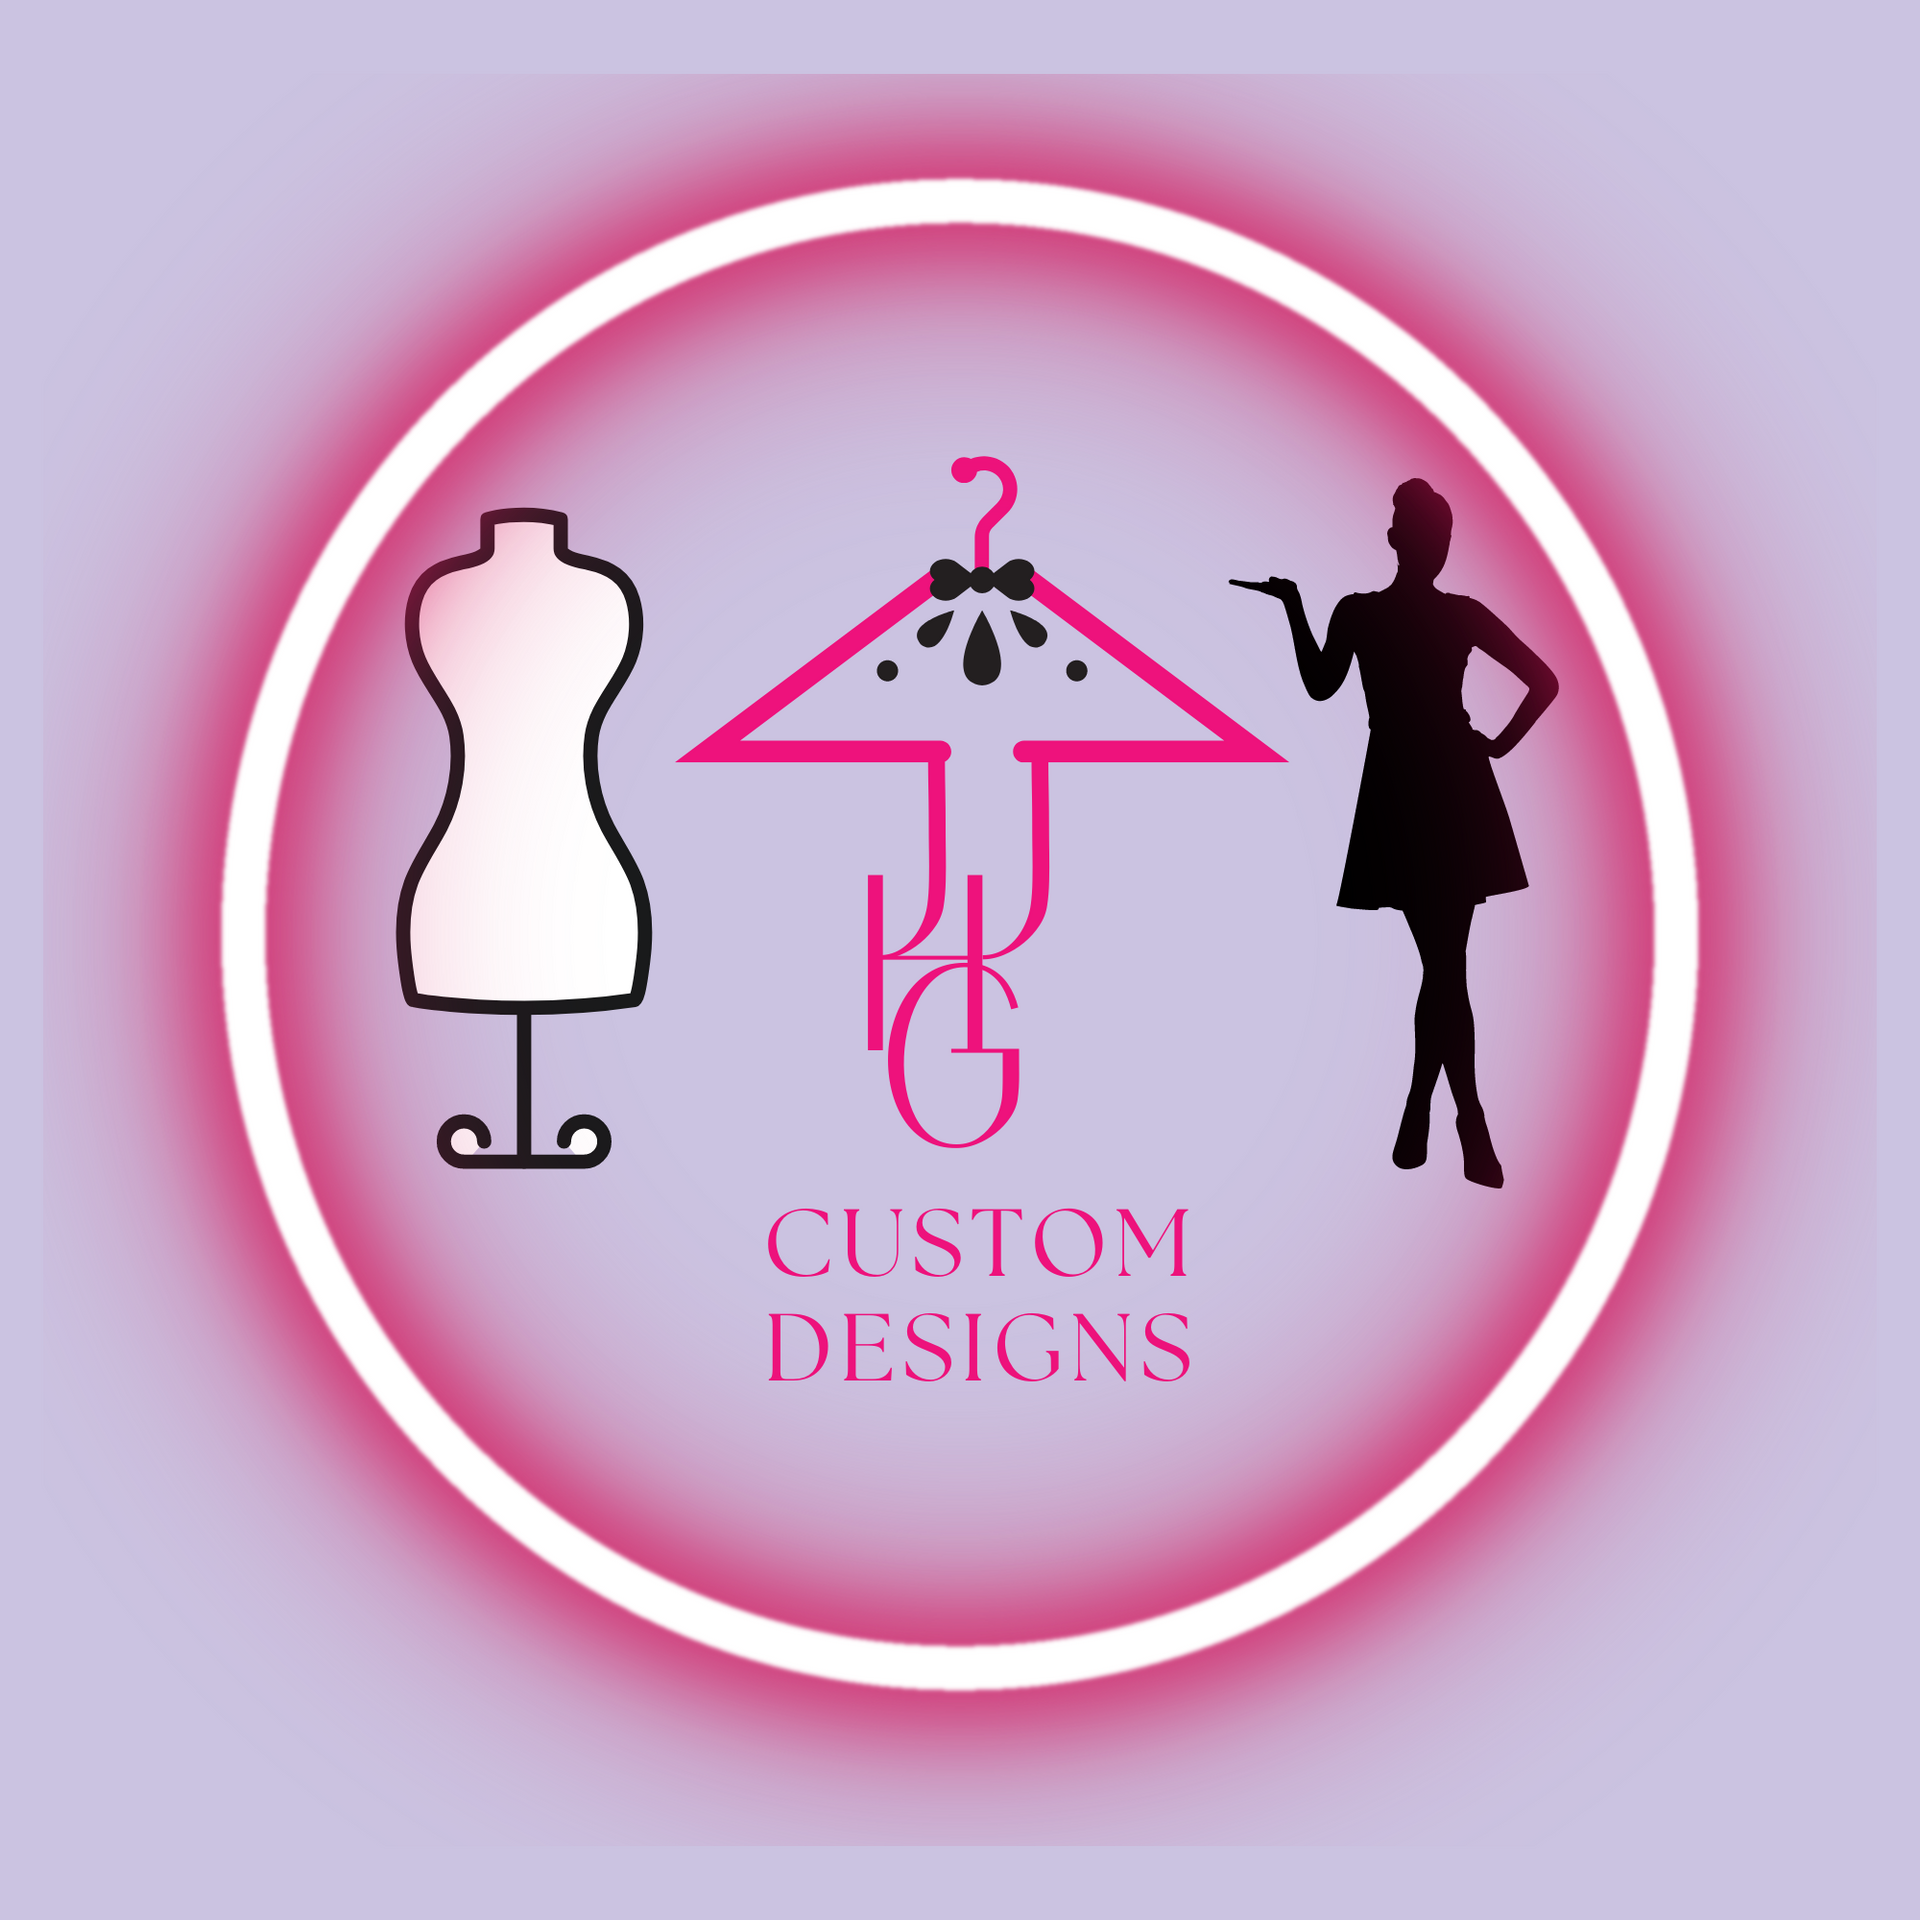 JJHG Custom Designs